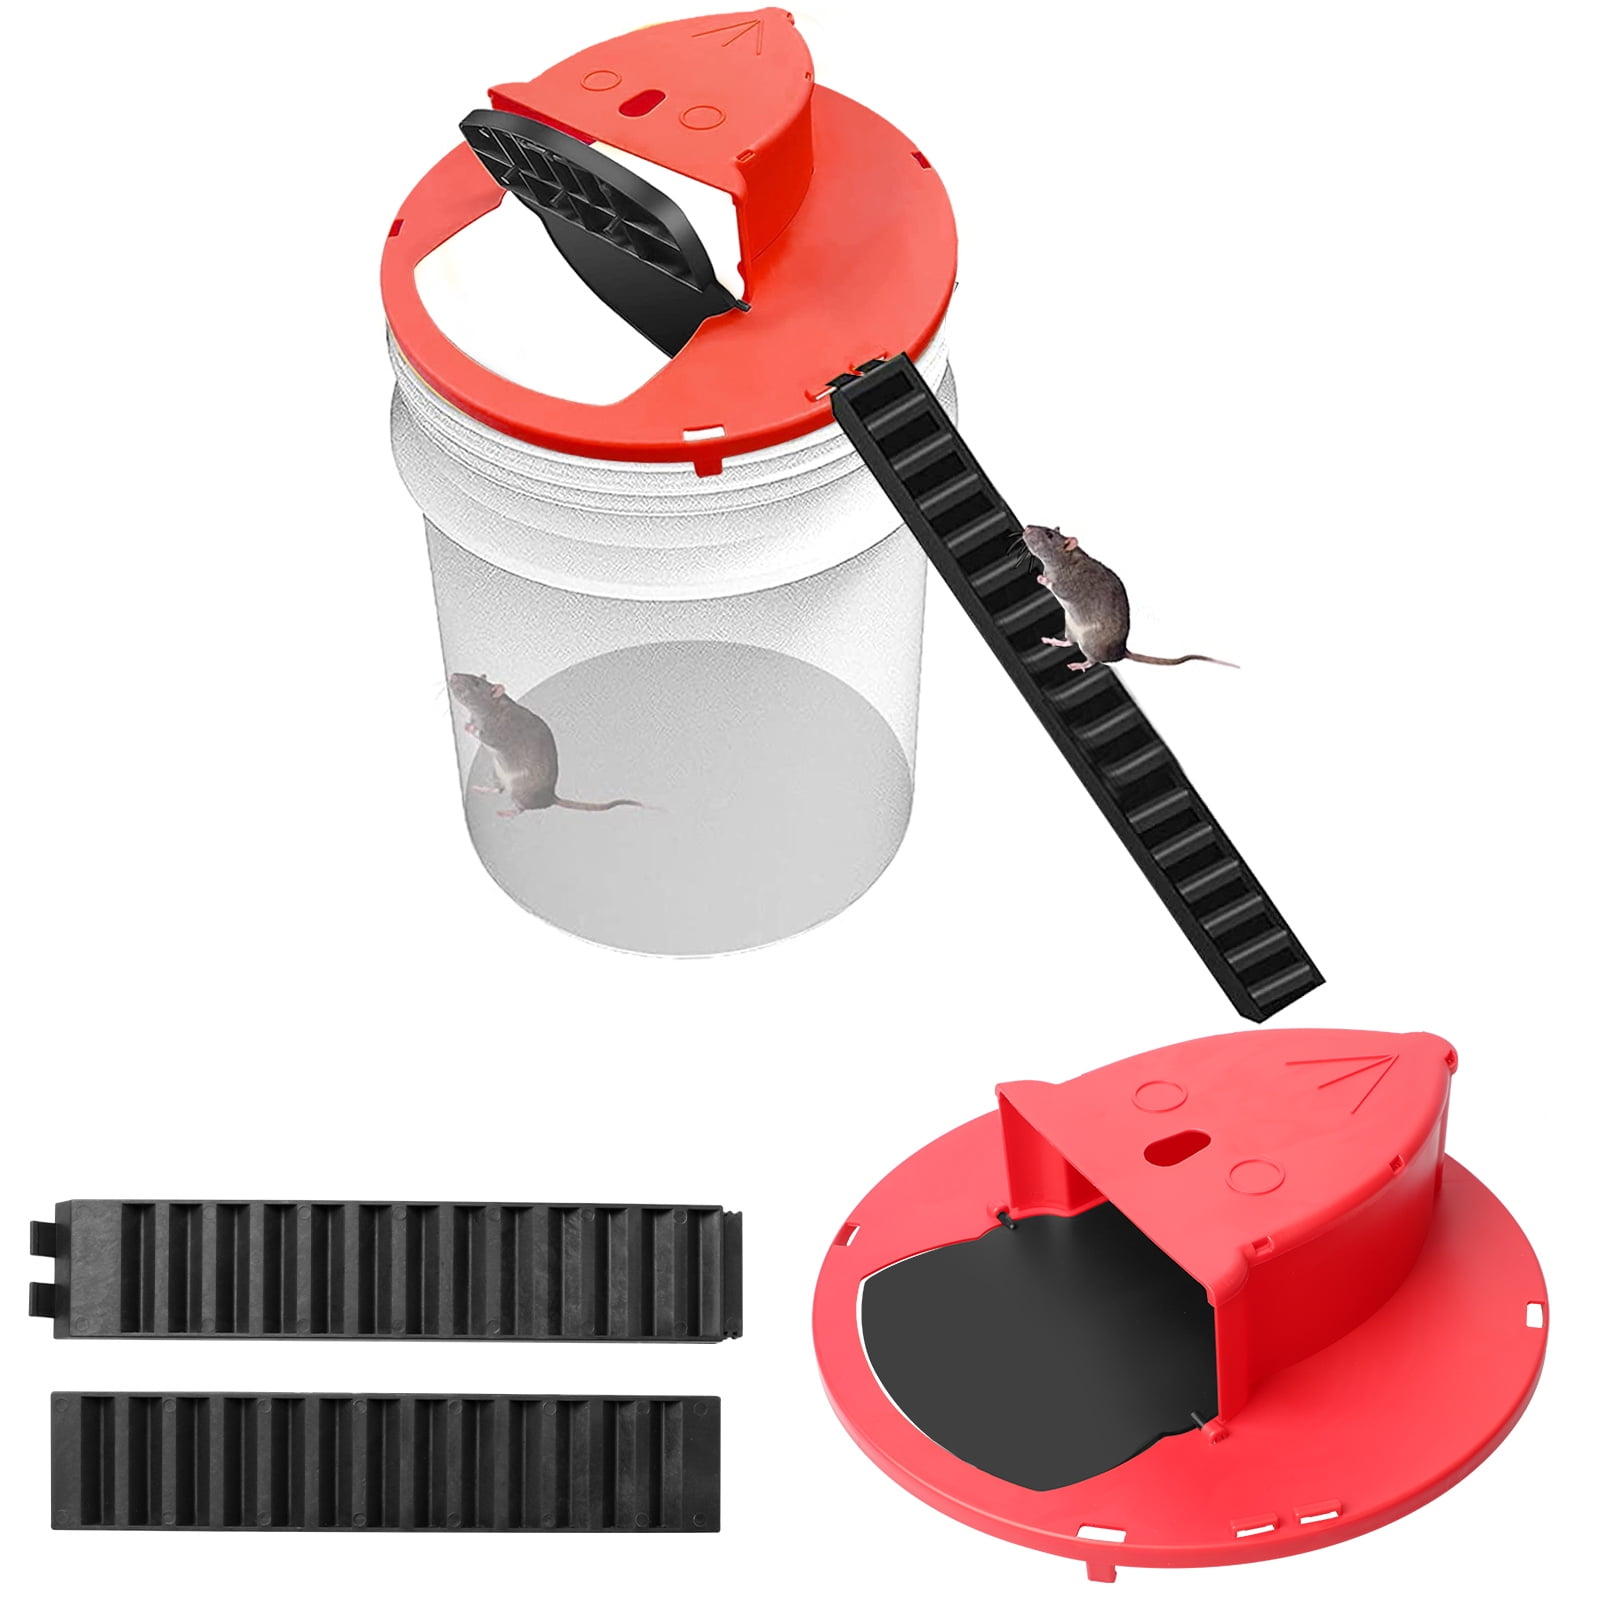 Flip Slide Bucket Lid Mouse Traps - Humane Rat Catcher - Multi-catch Bucket  Trap For Indoor And Outdoor Application - Auto-reset Trap Door Style - Reu